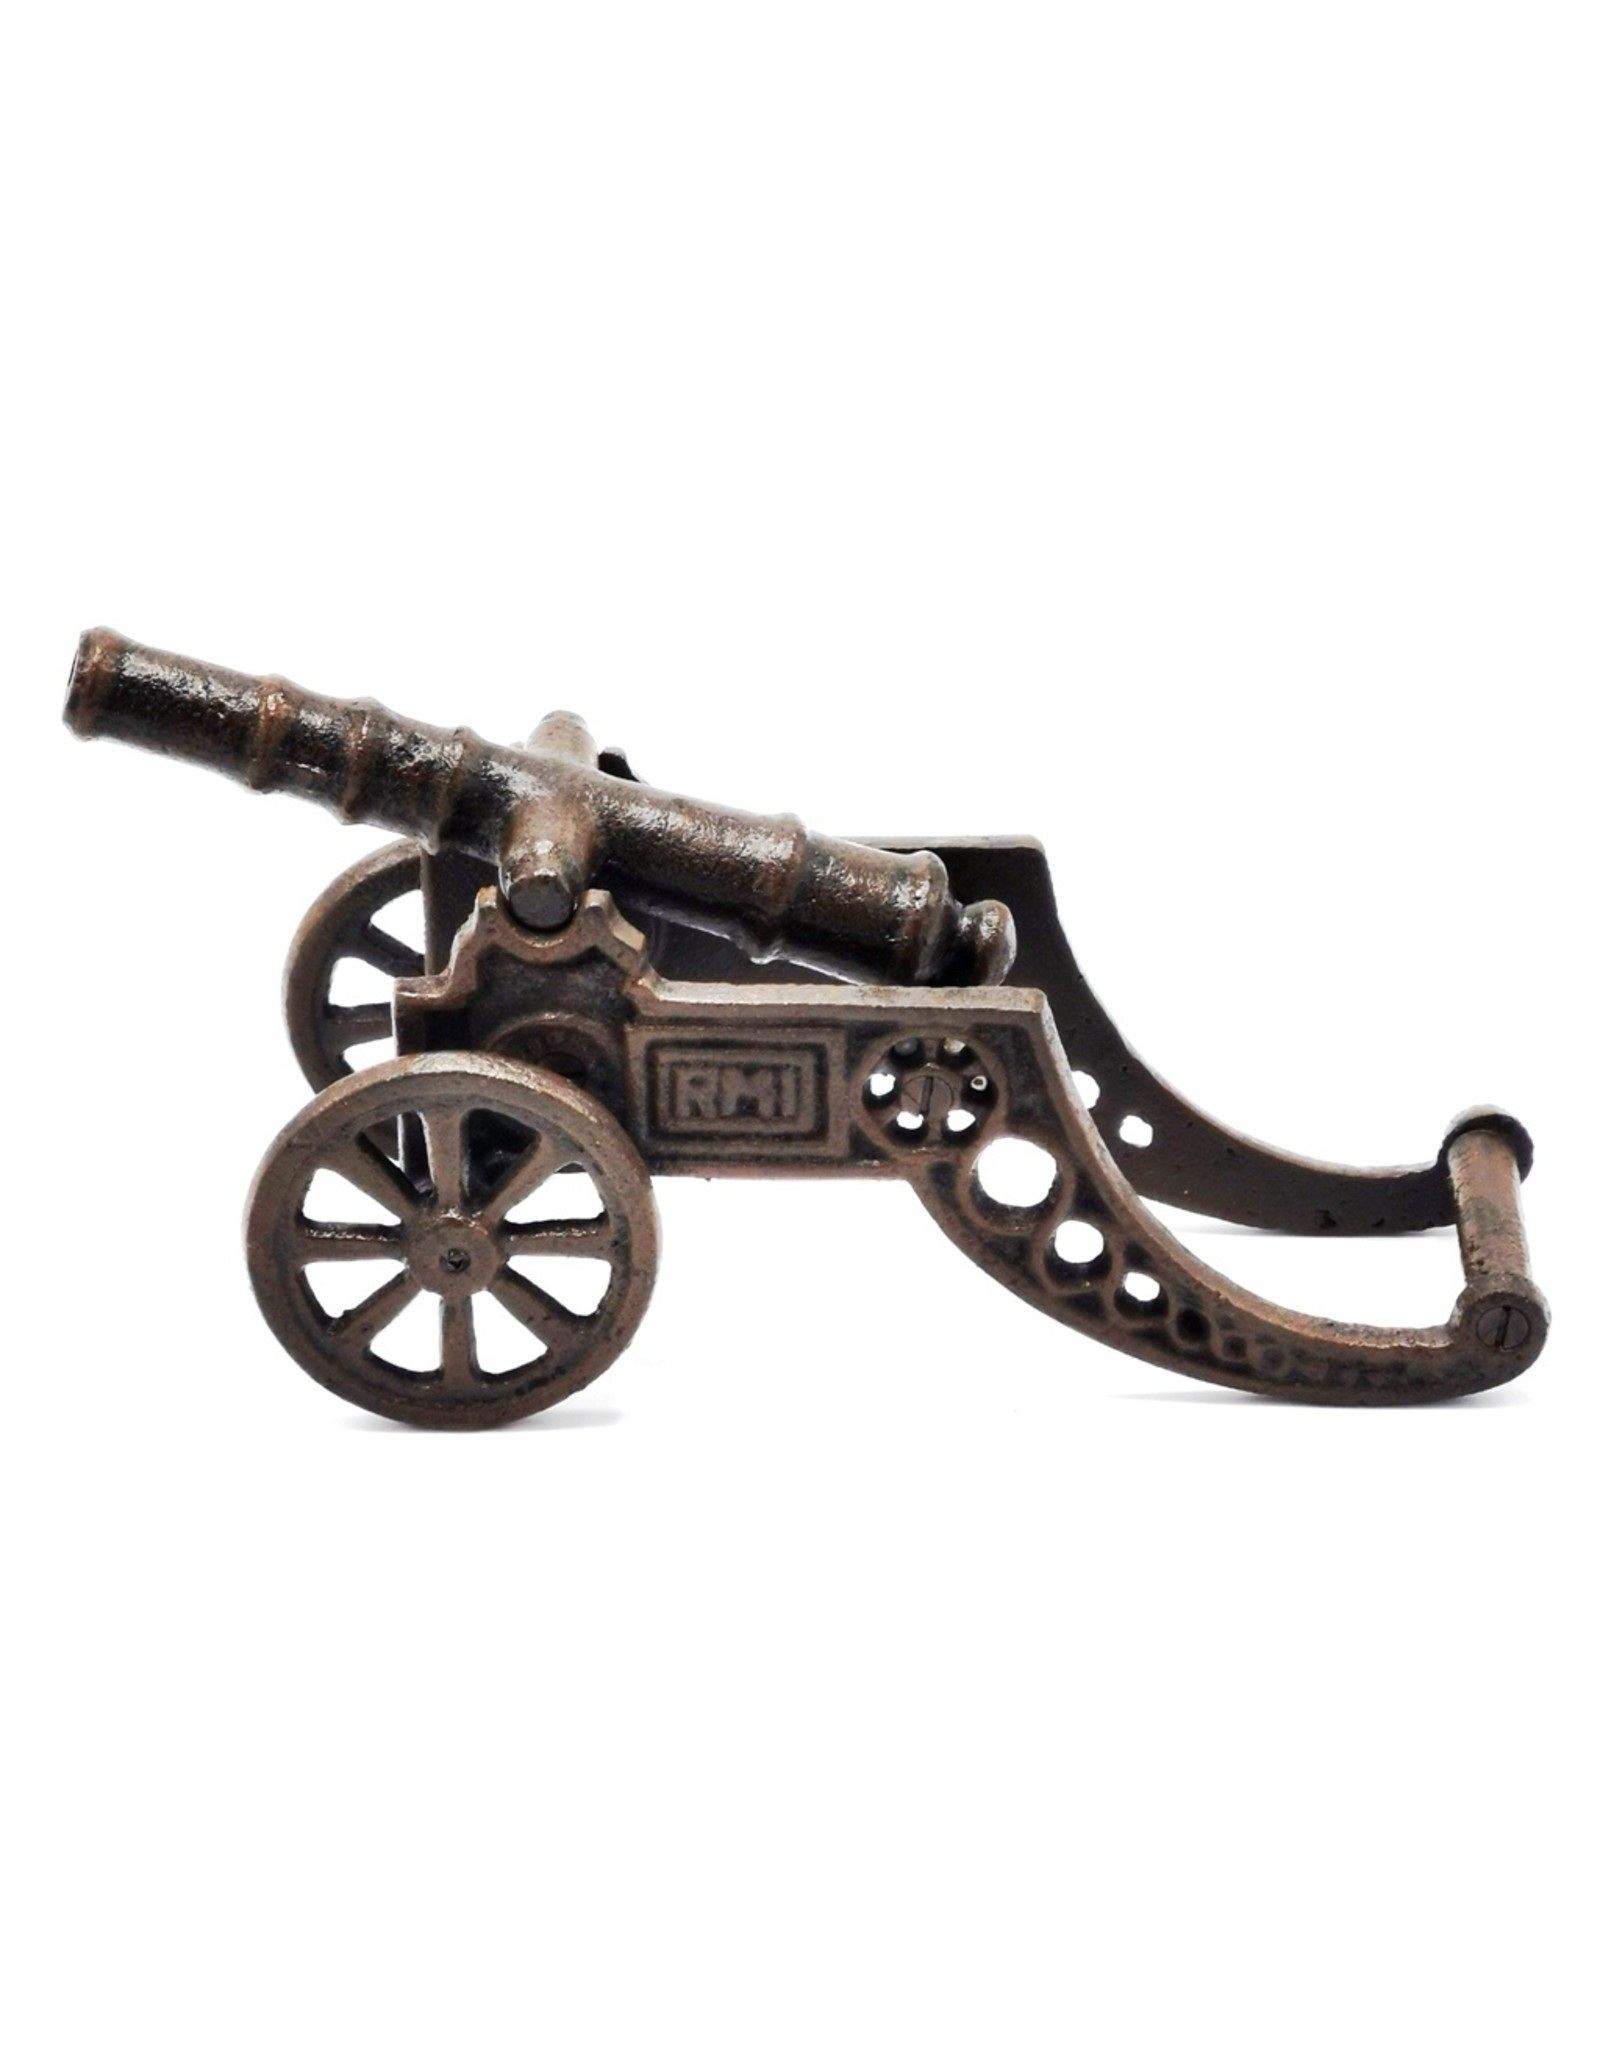 Trukado Miscellaneous - Cast iron canon miniature